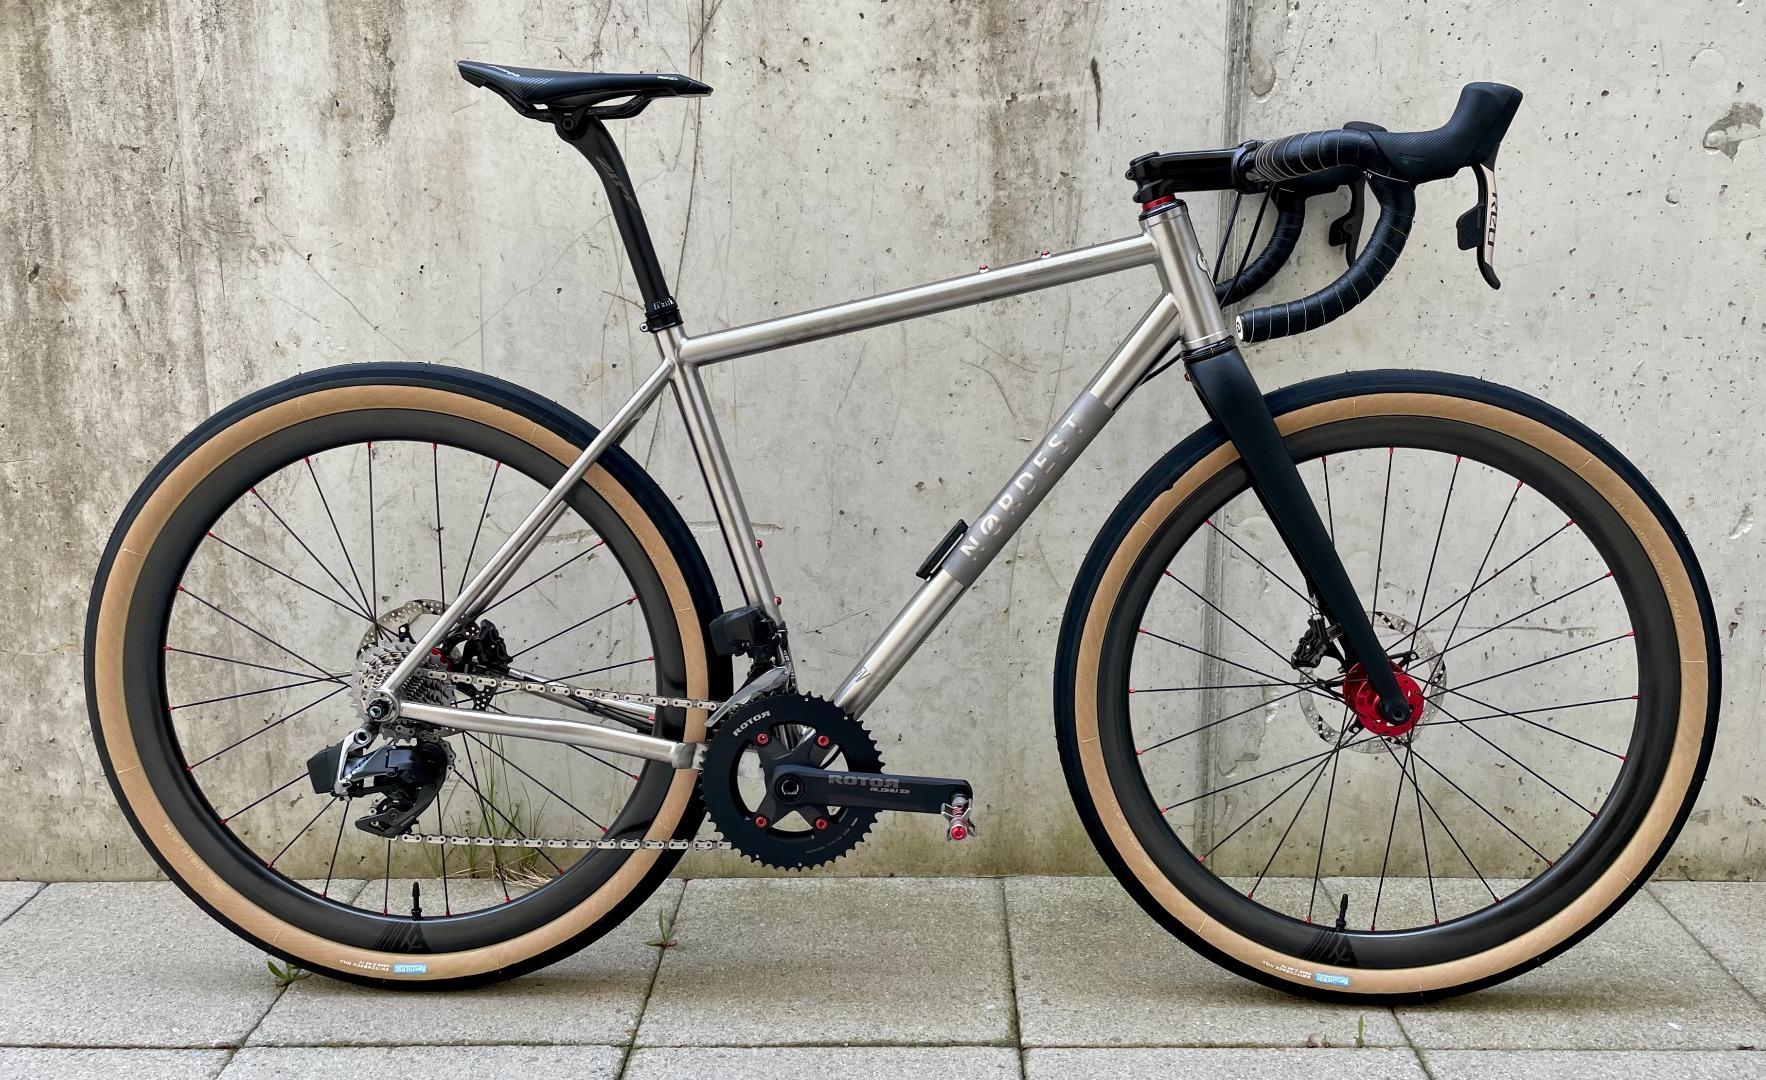 nordest-albarda-27.5-gravel-bike-on-light-bicycle-wr35-650b-carbon-wheels